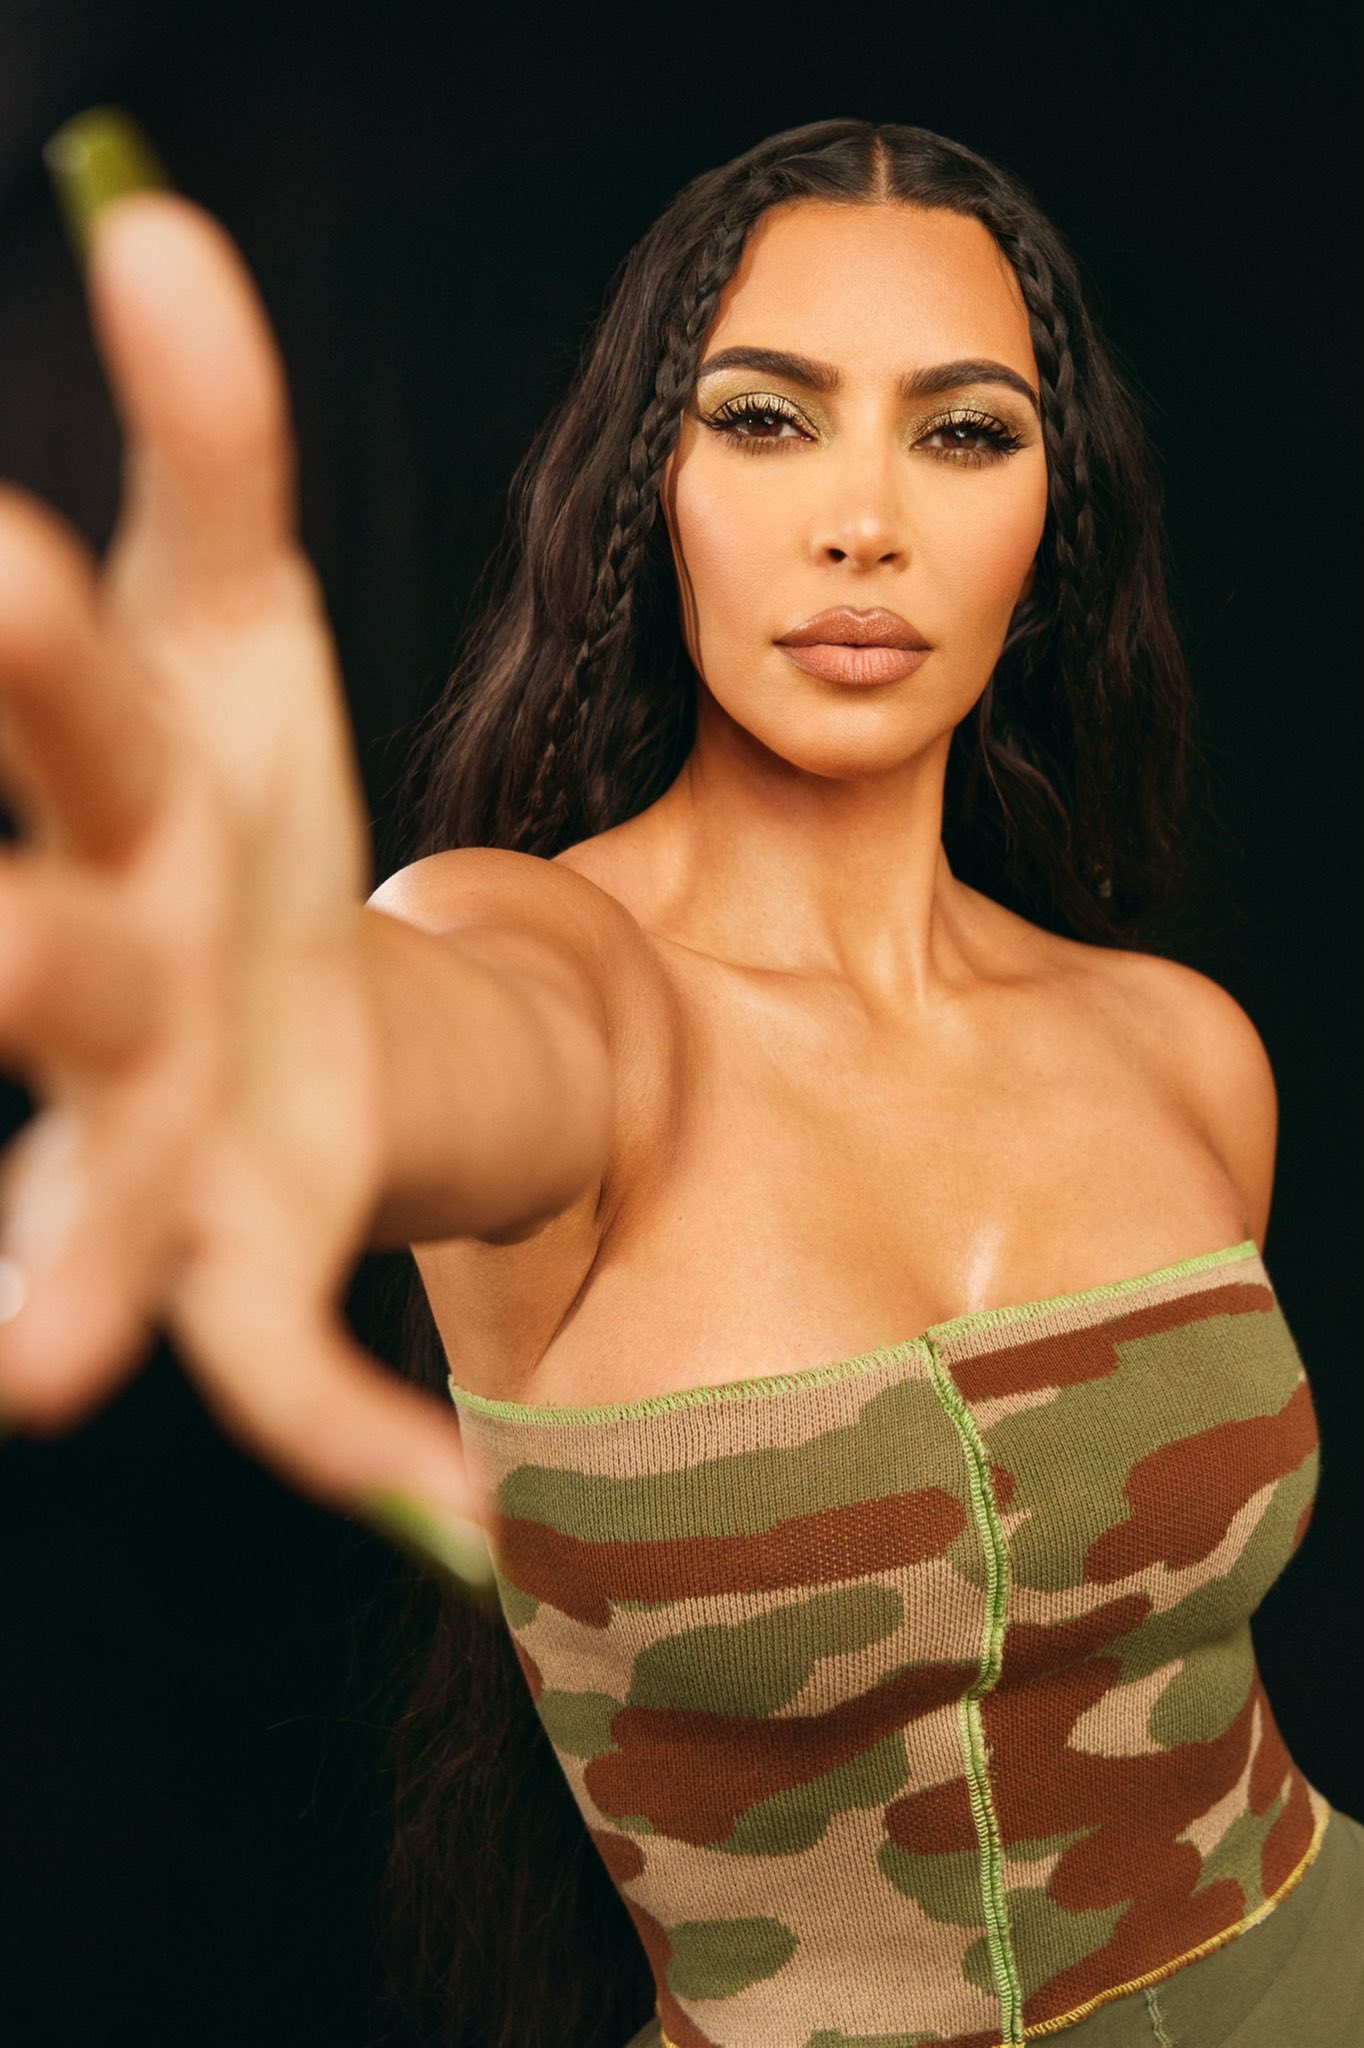 Kim Kardashian Gets Taped Up for Fashion! - Photo 57